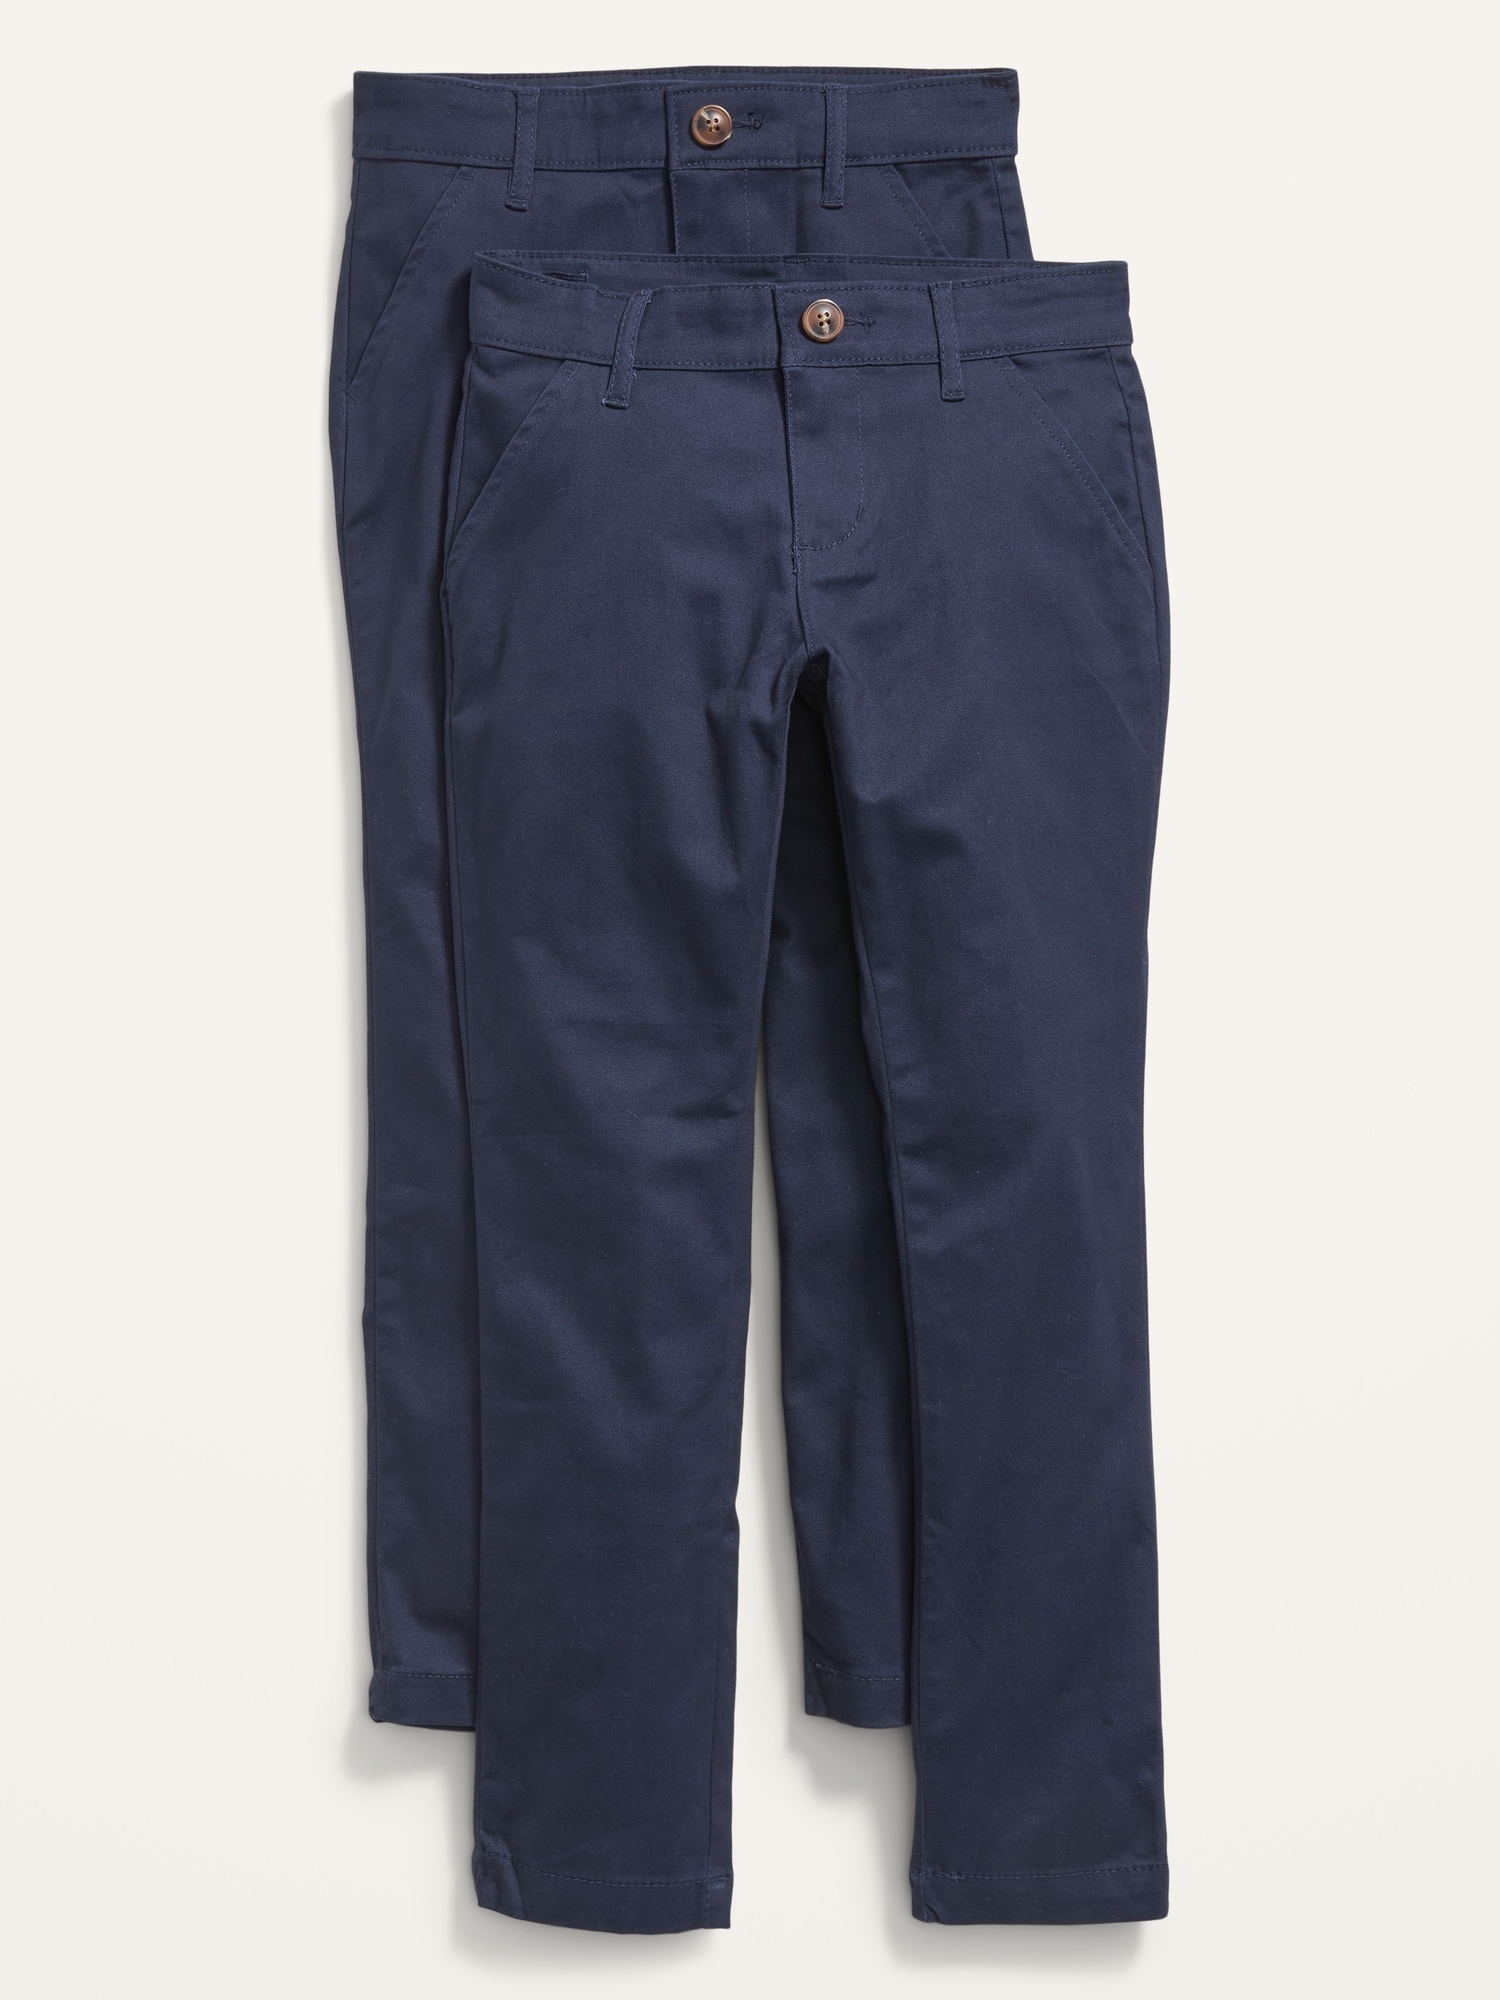 Old Navy - School Uniform Skinny Chino Pants 2-Pack for Girls blue